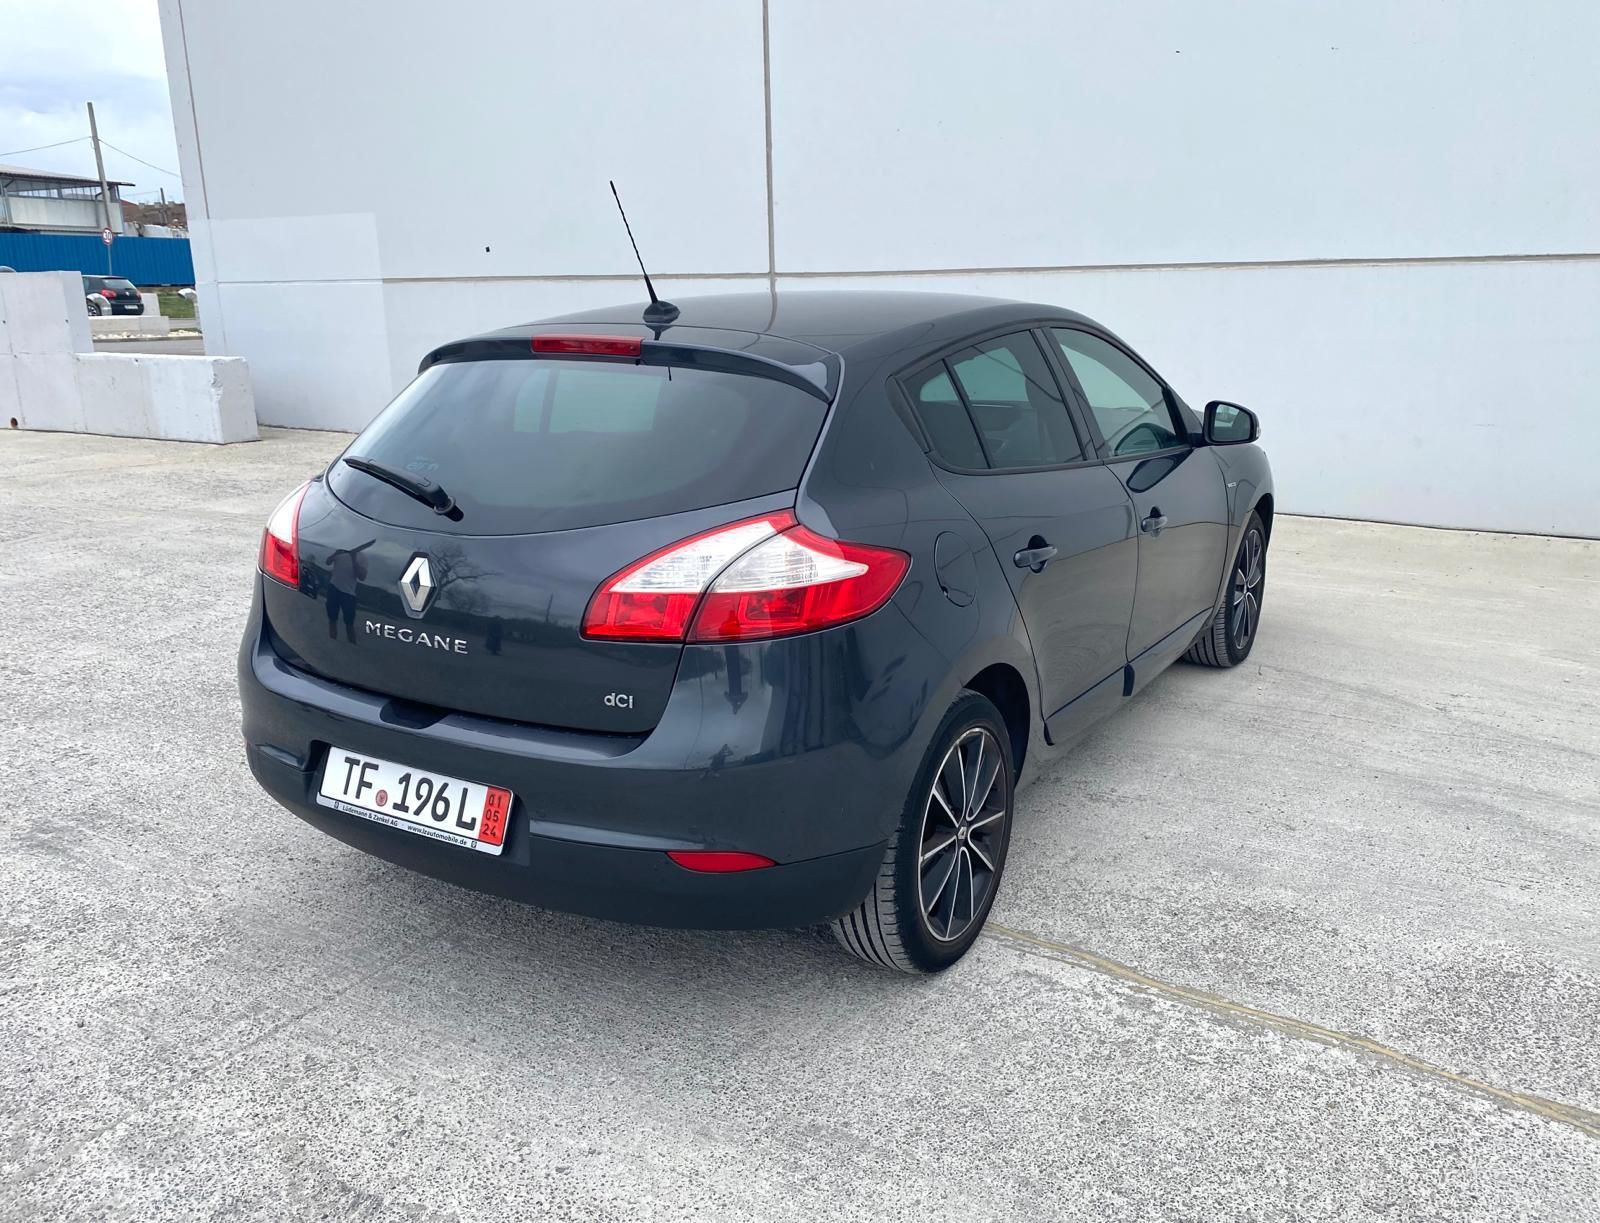 Renault Megane lll Bose Edition